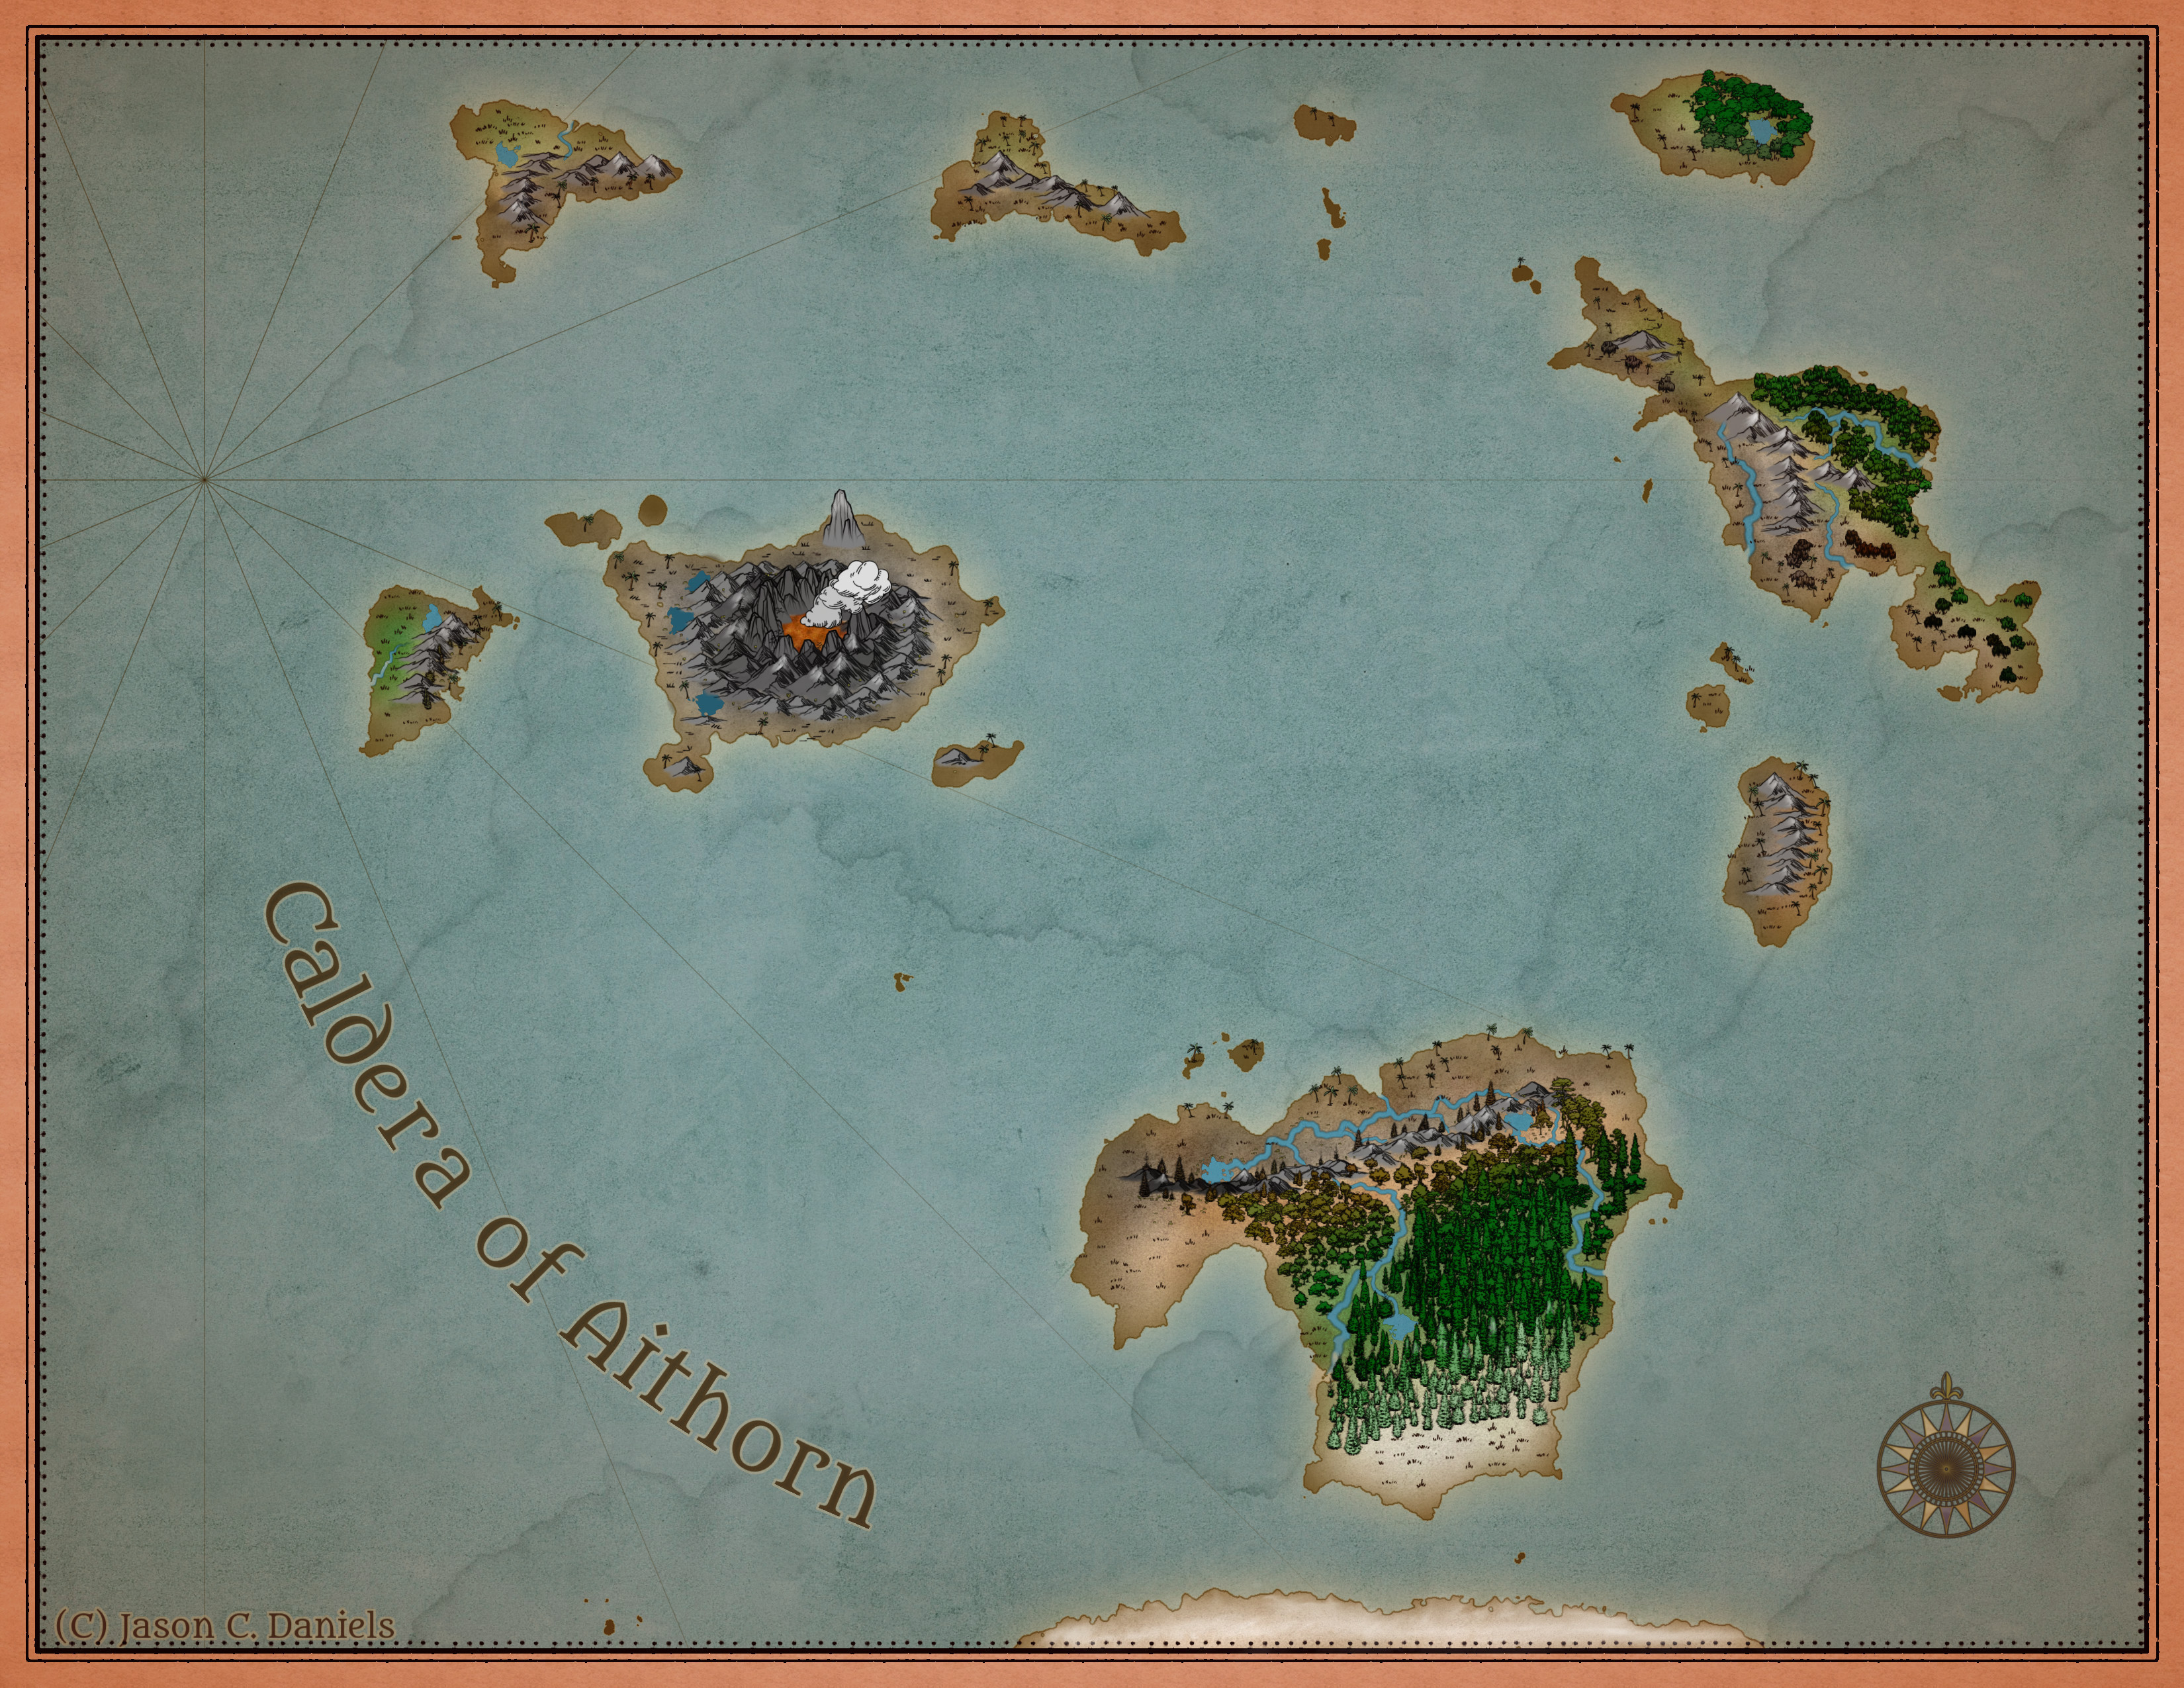 Map of the Caldera of Aithorn